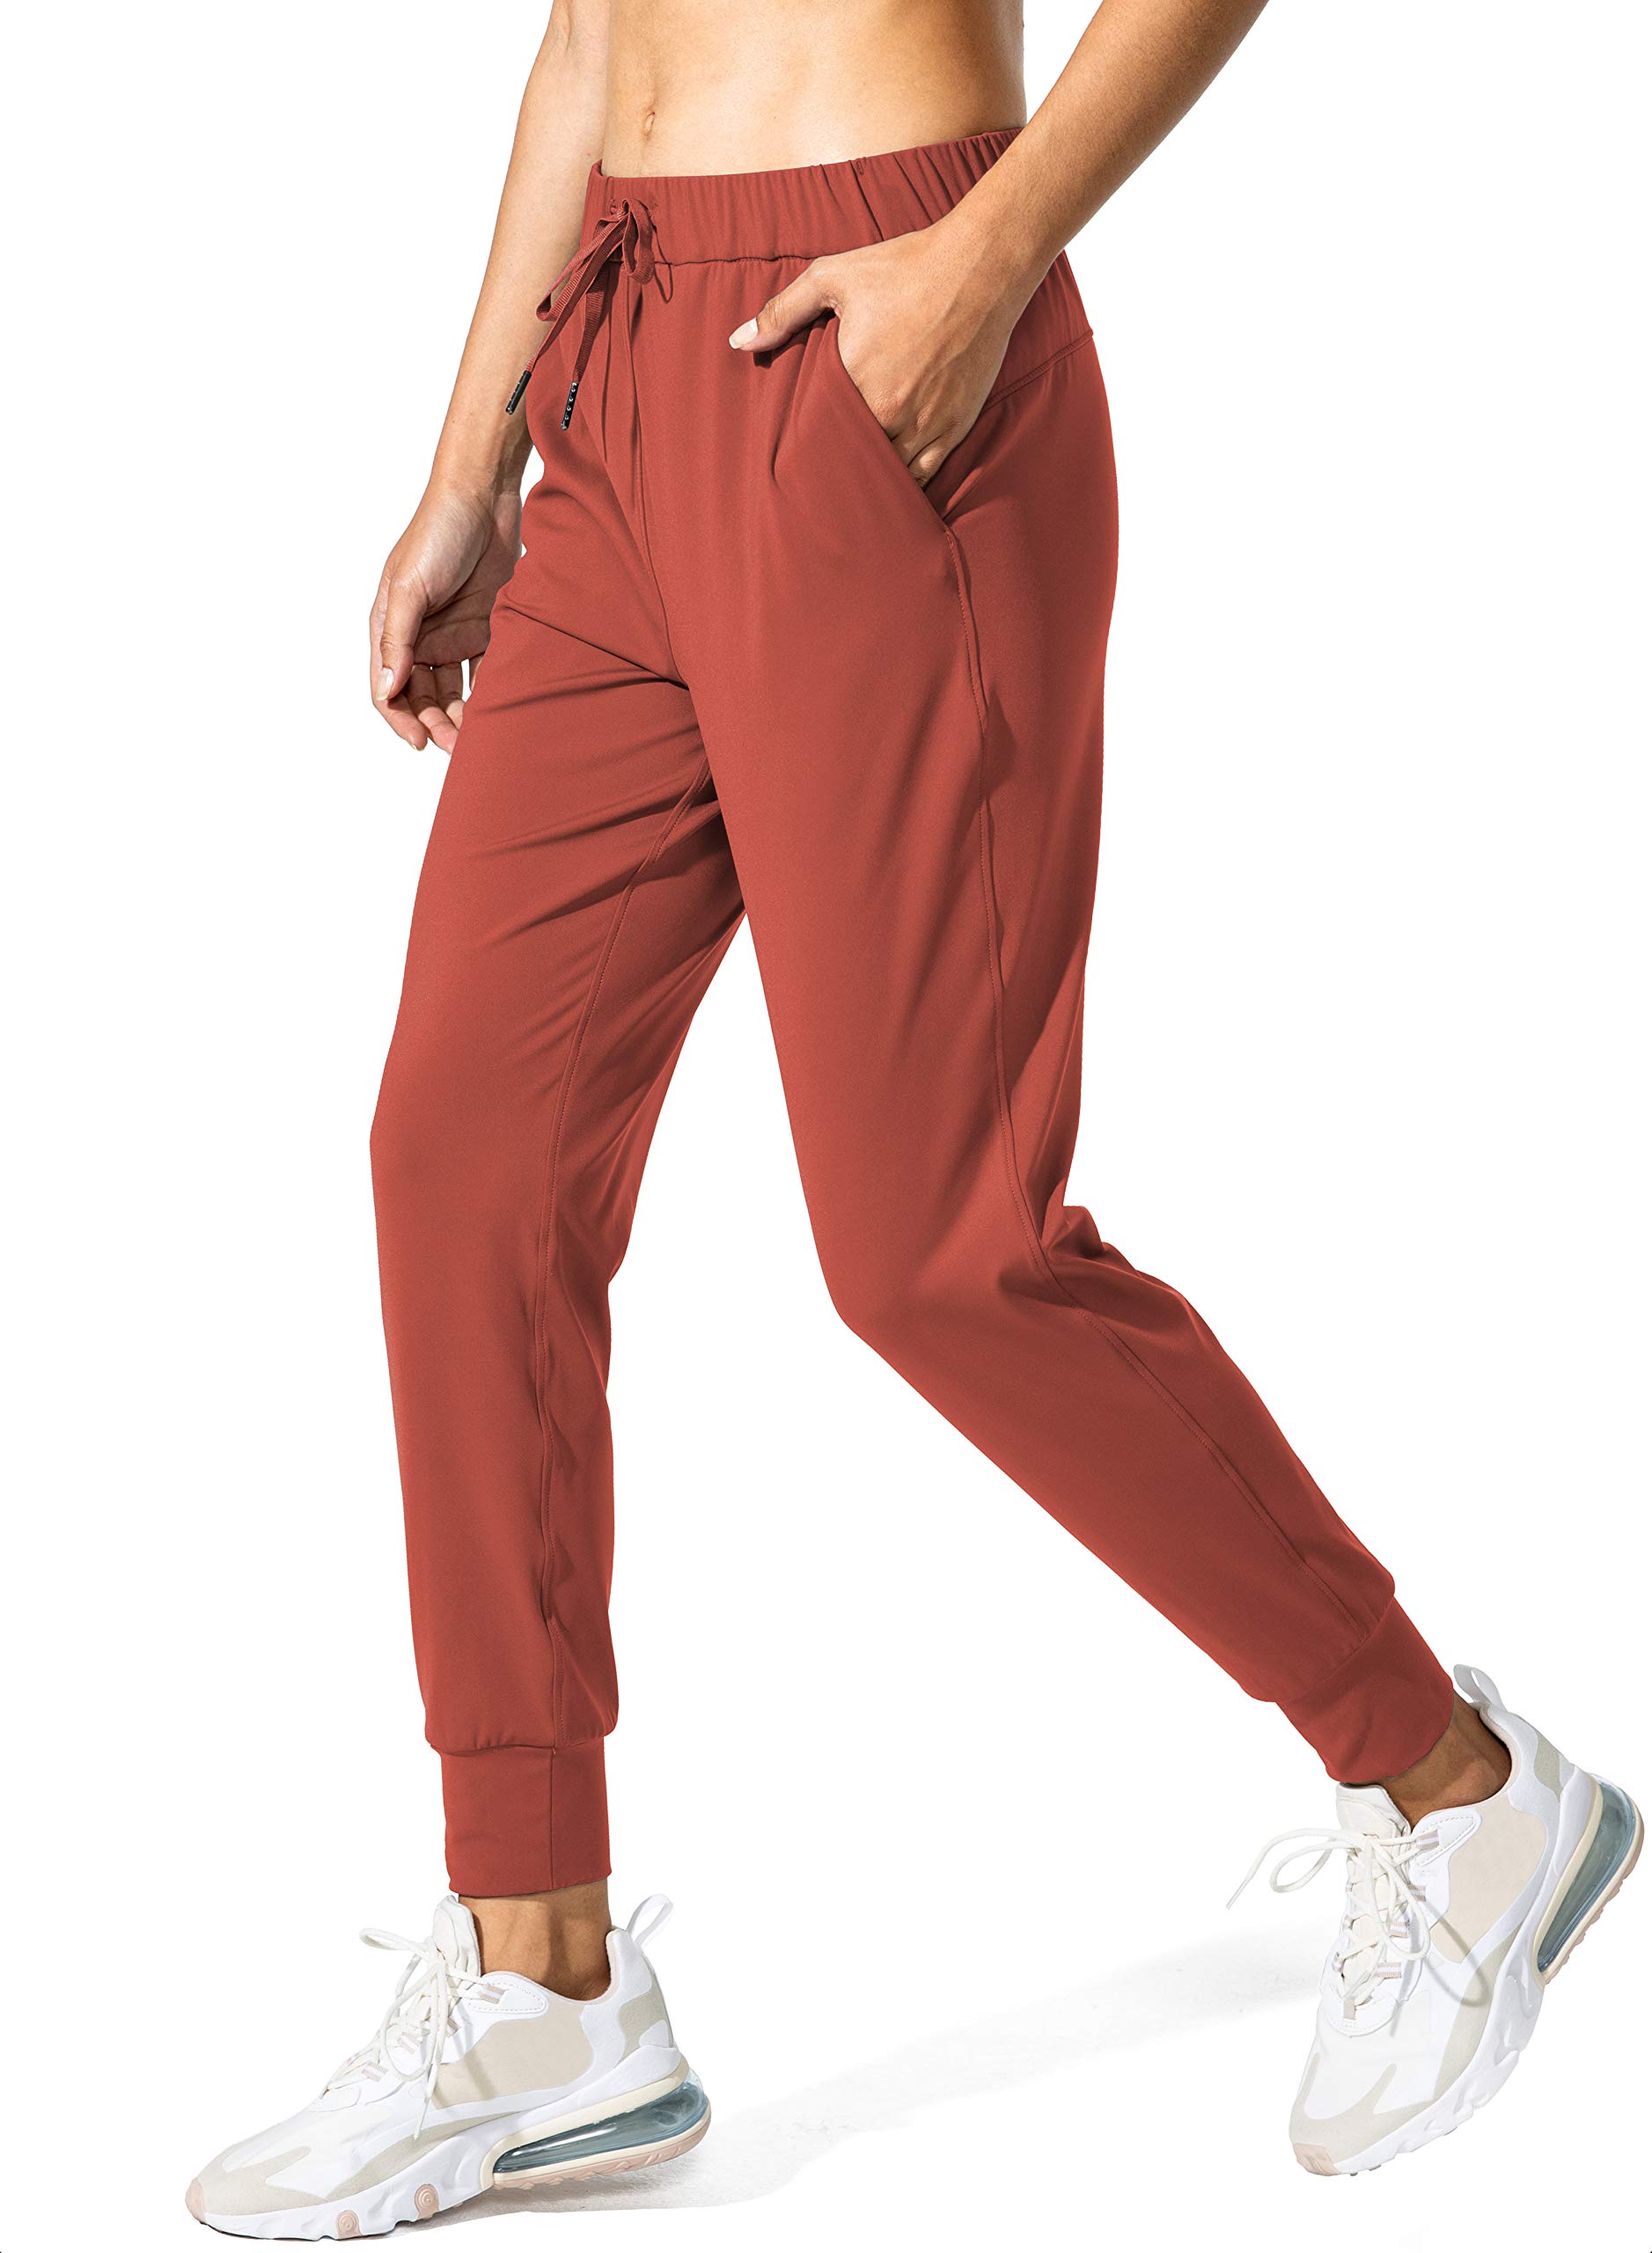 SANTINY Womens Joggers Pants Pockets Drawstring Running Sweatpants for Women Lounge Workout Jogging(Savannah Red_XL)